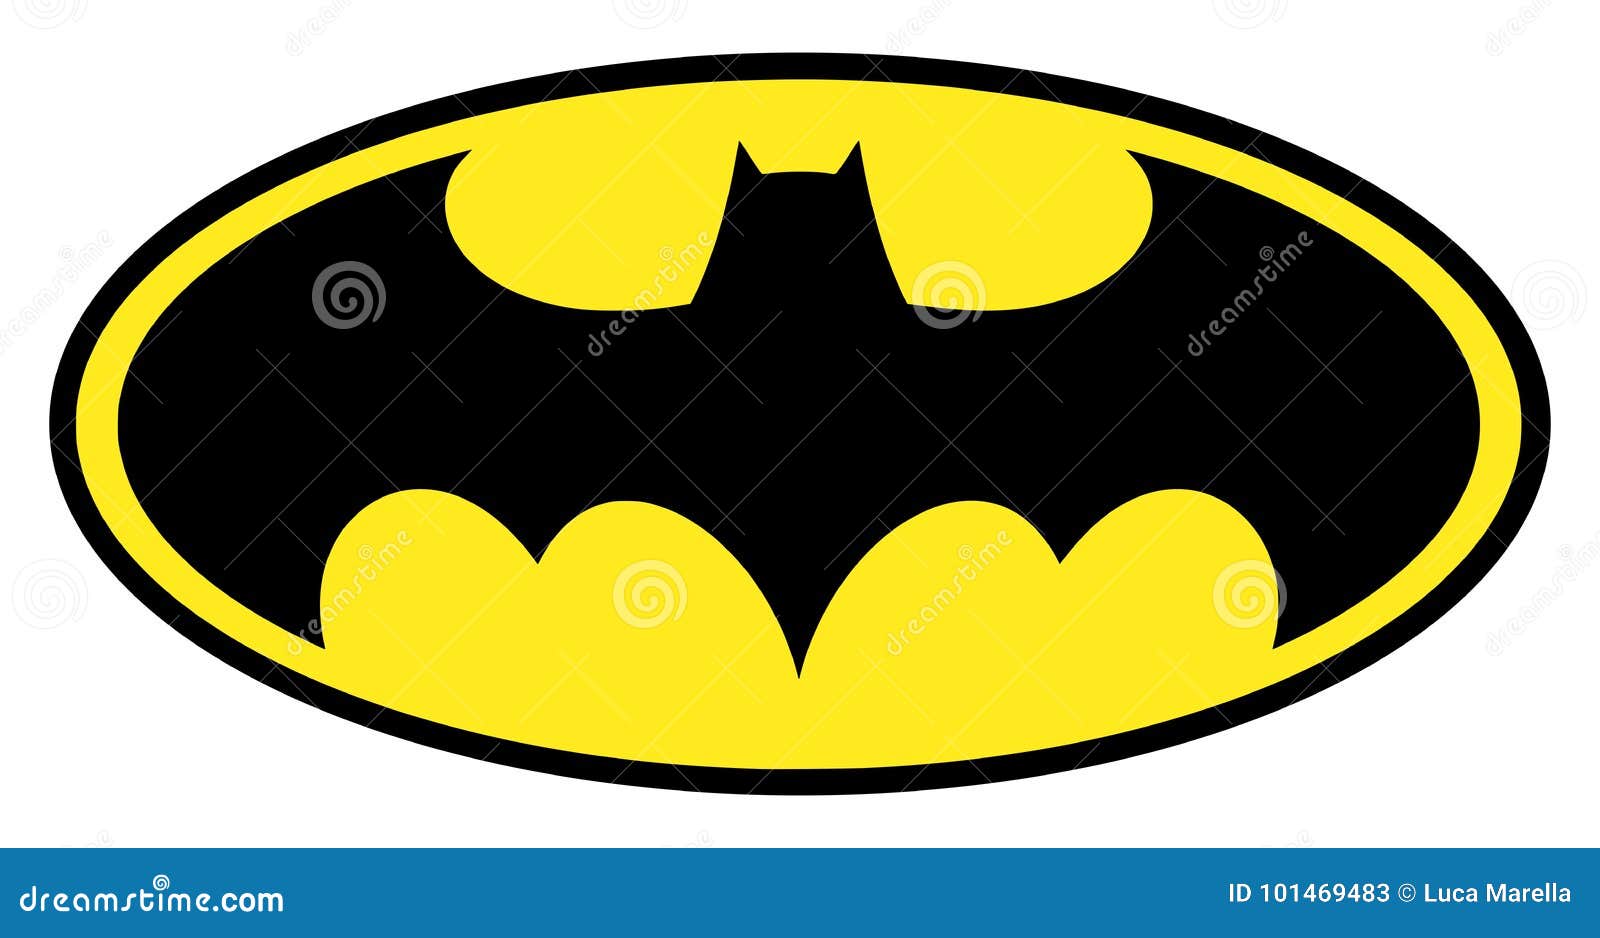 46+] Batman Logo iPhone Wallpaper